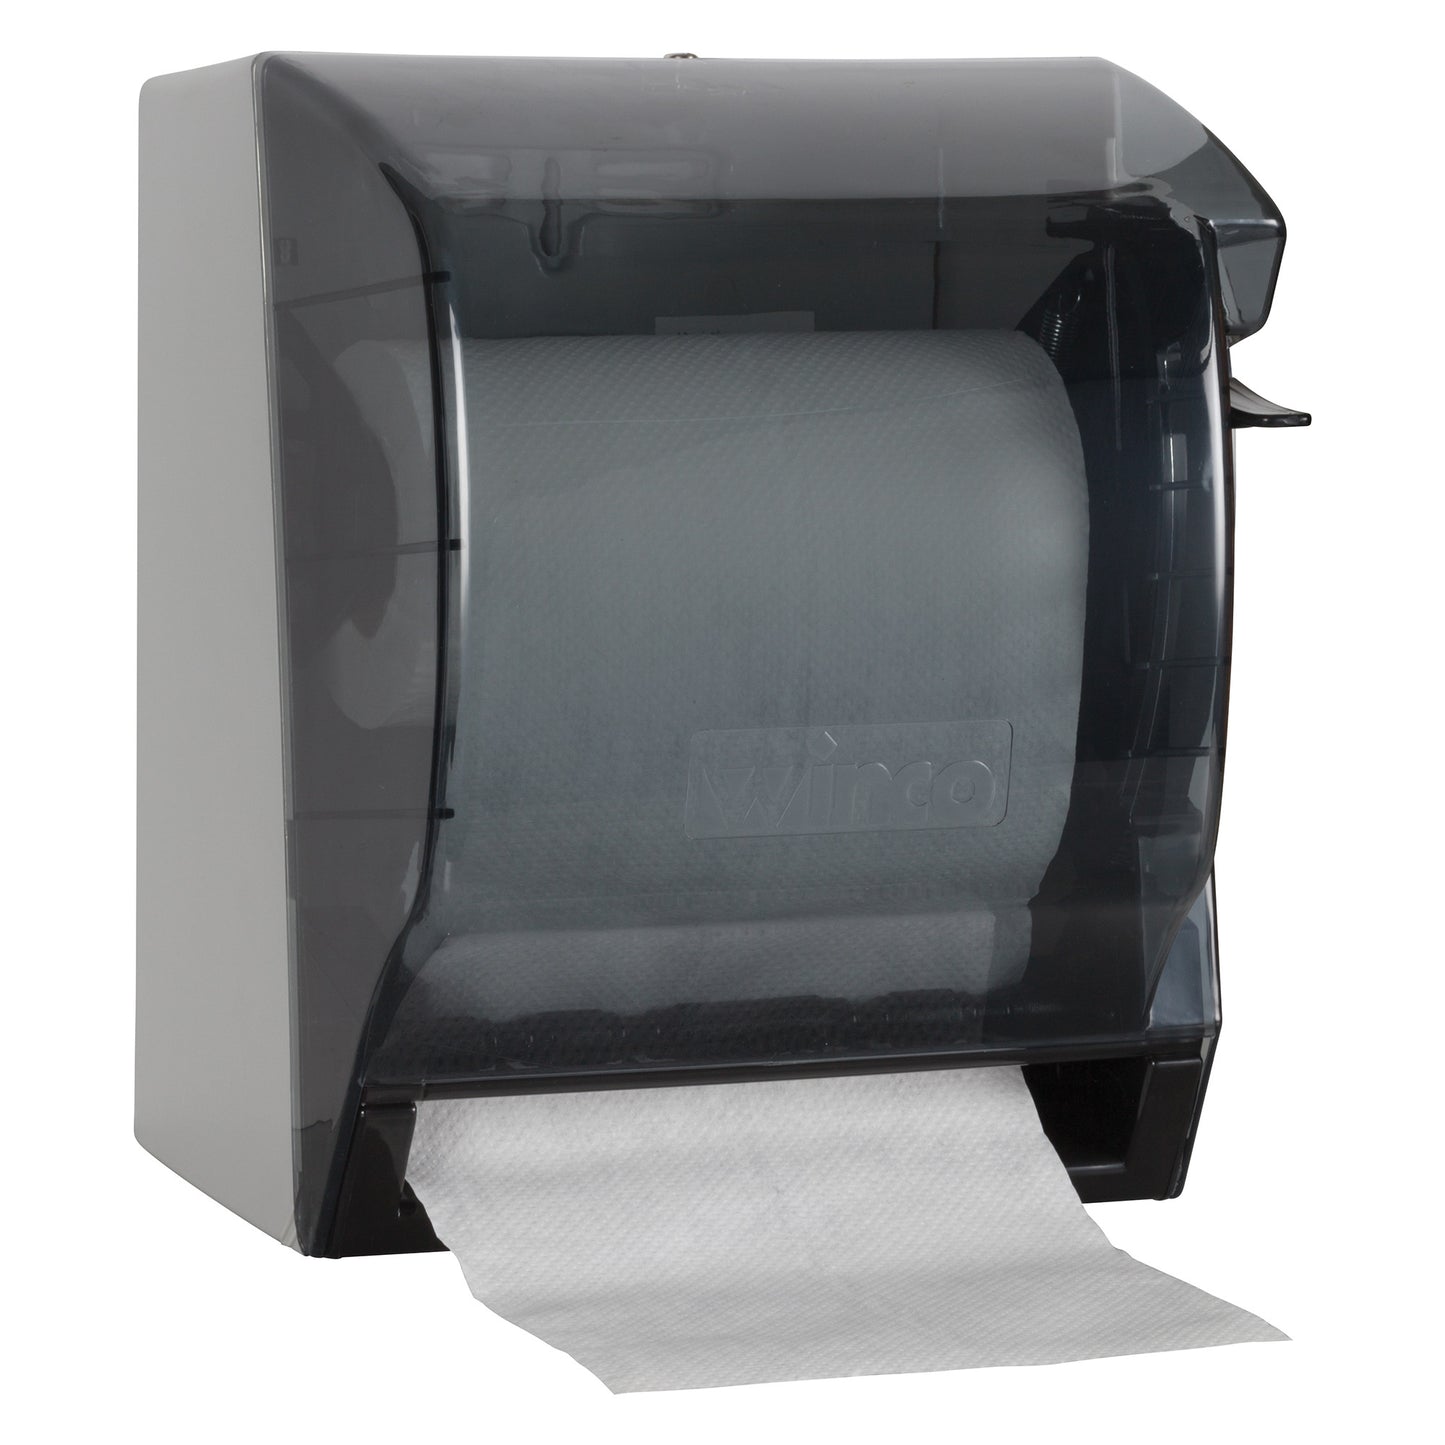 TD-500 - Paper Towel Dispenser, Lever Handle